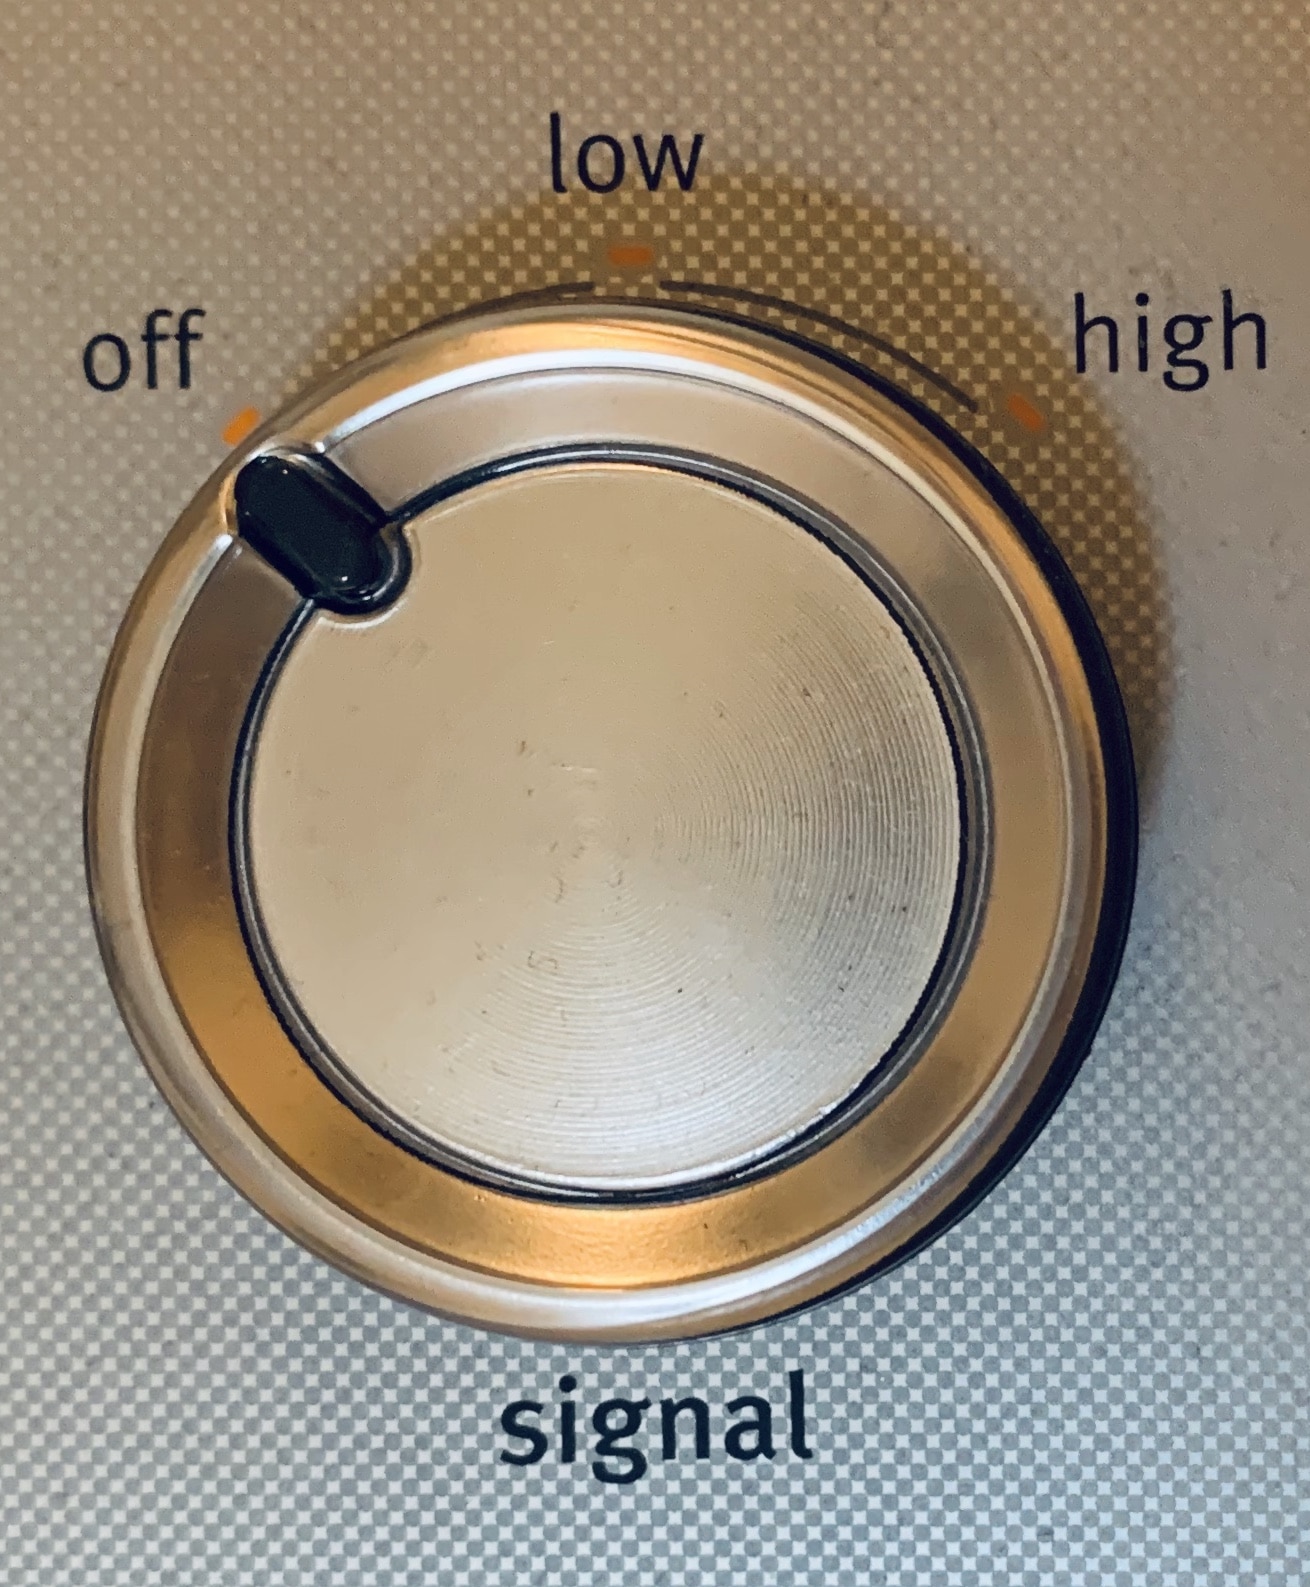 Signal Knob on Clothes Dryer